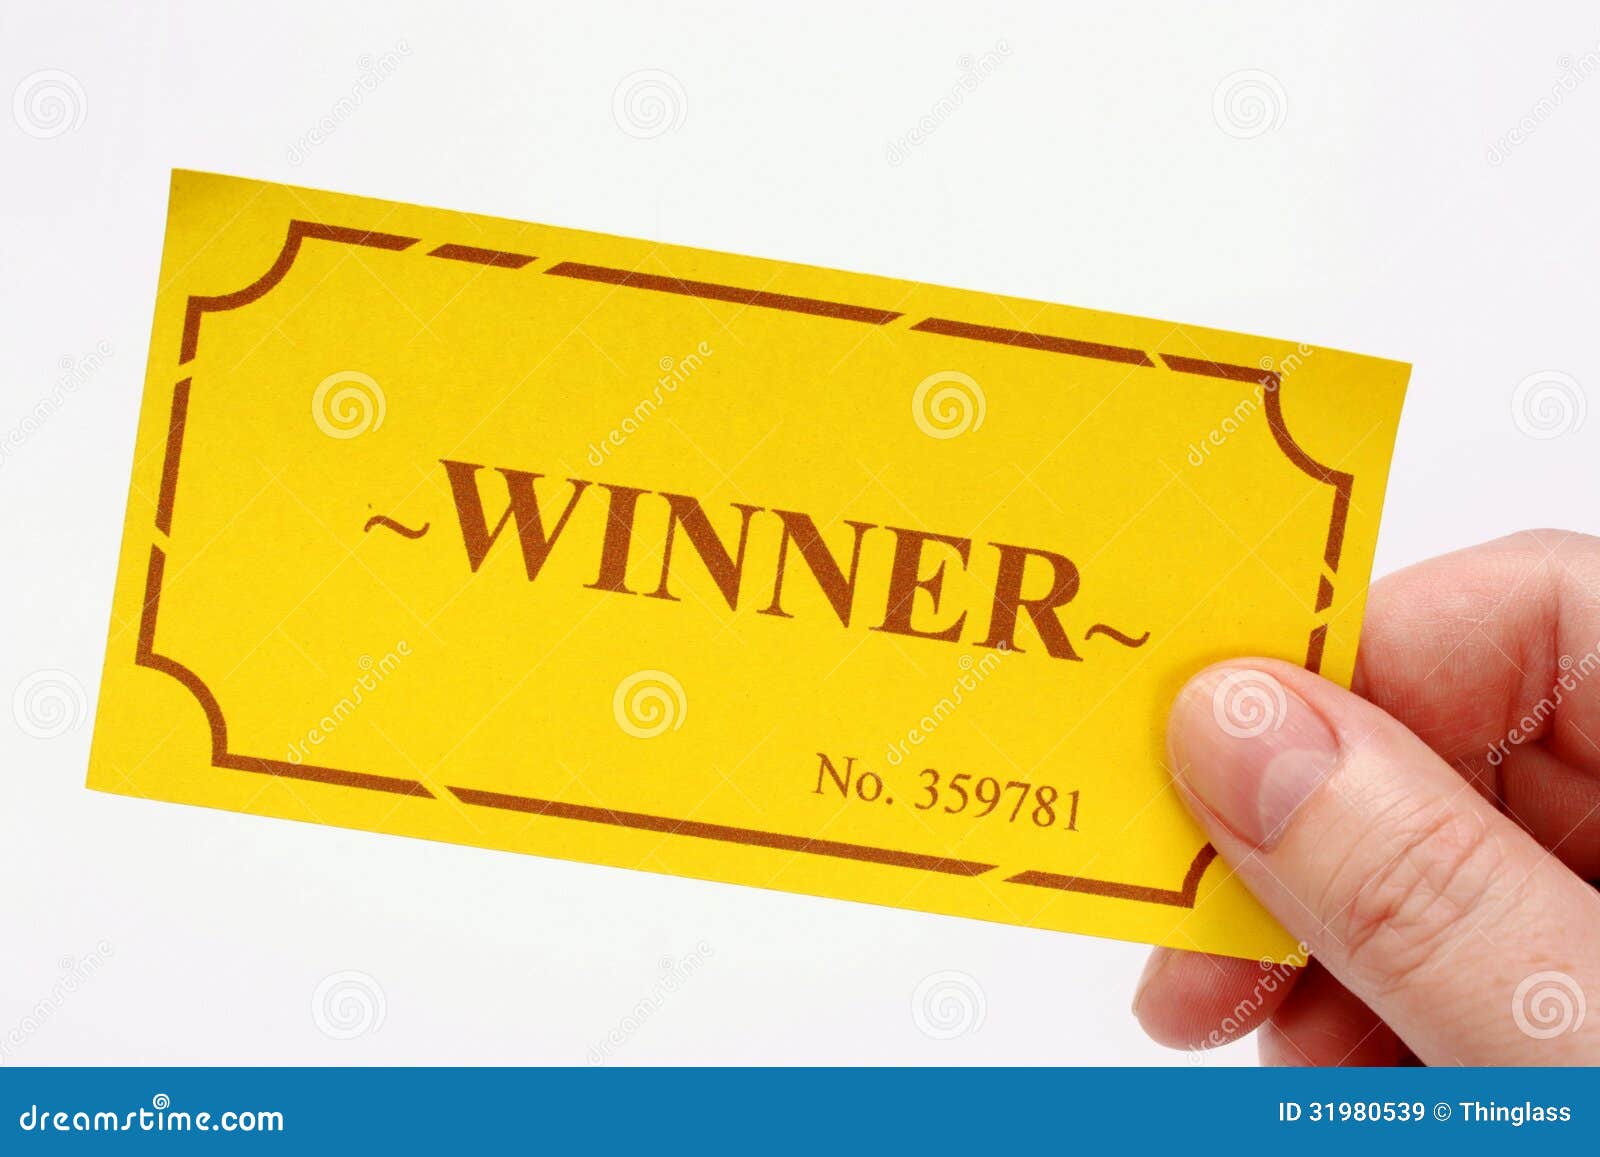 winning-golden-ticket-hand-holding-out-first-prize-reward-31980539.jpg